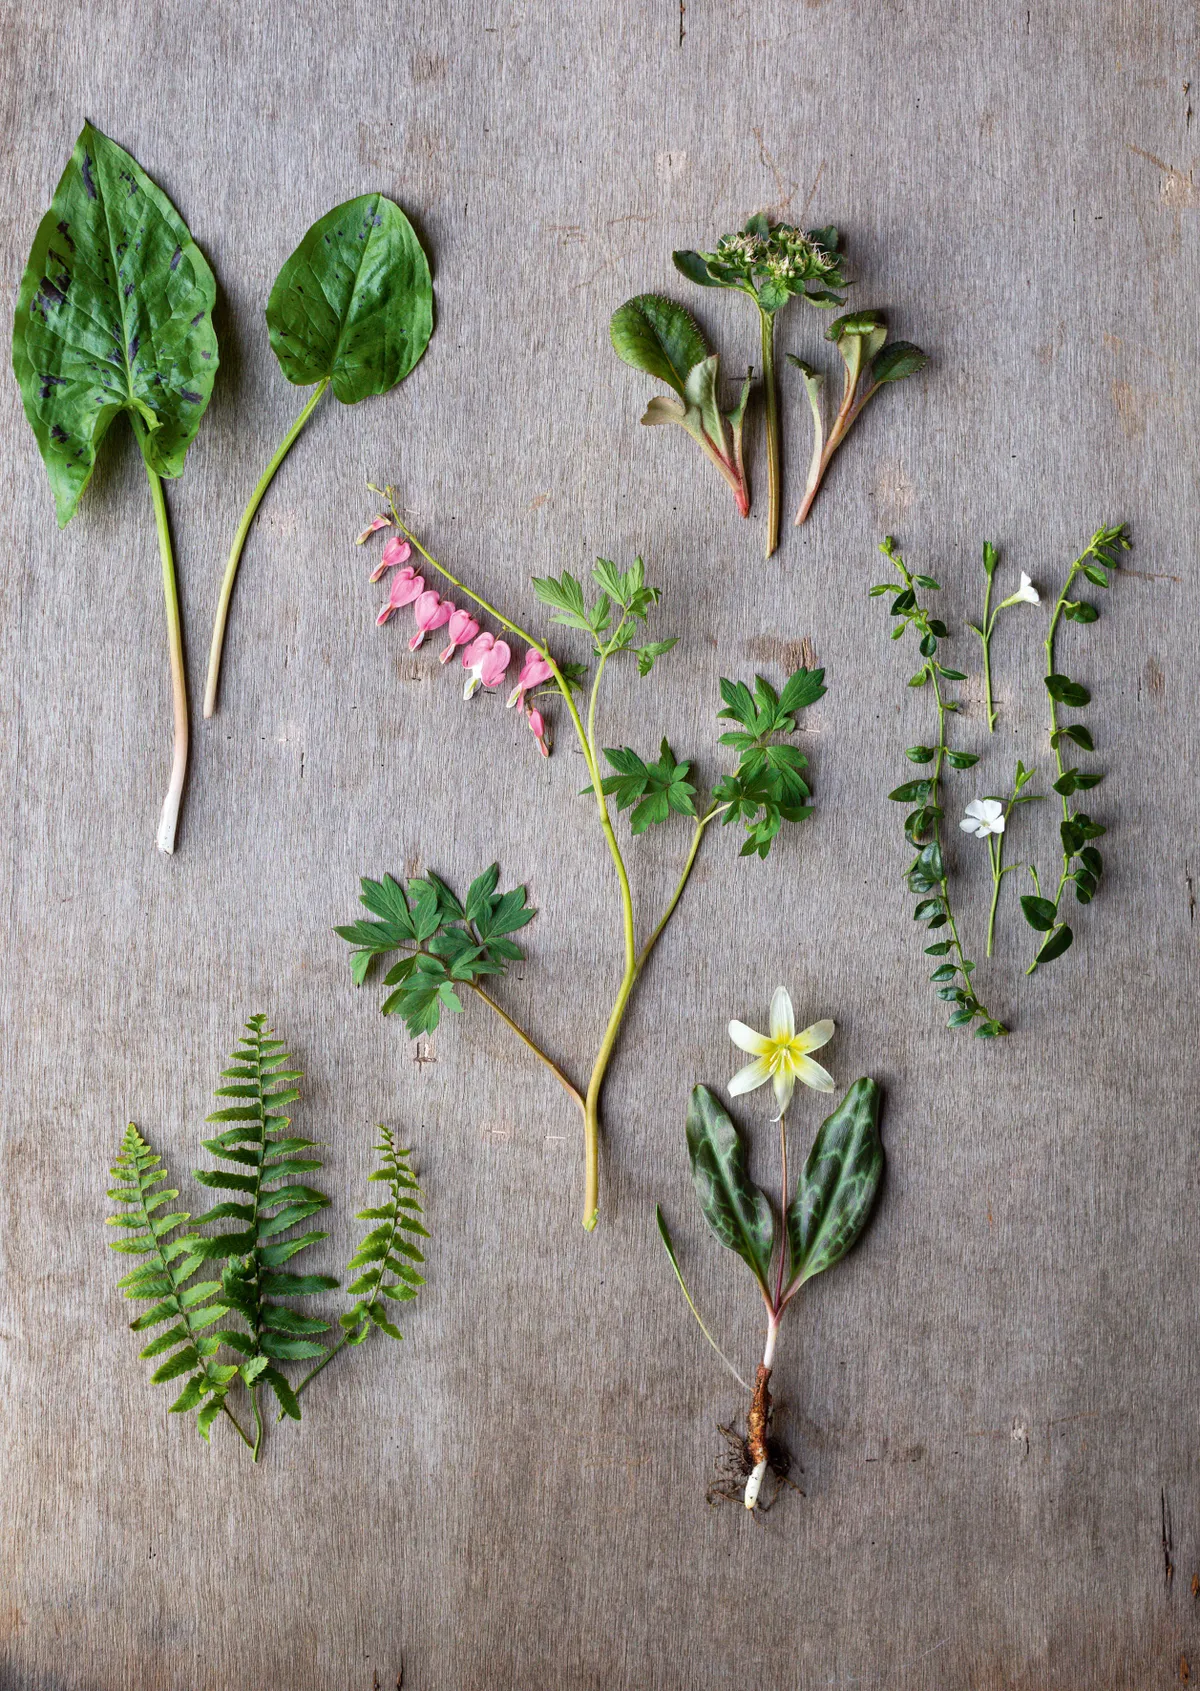 Plants used in Jenny Barnes' woodland pot. © Richard Bloom